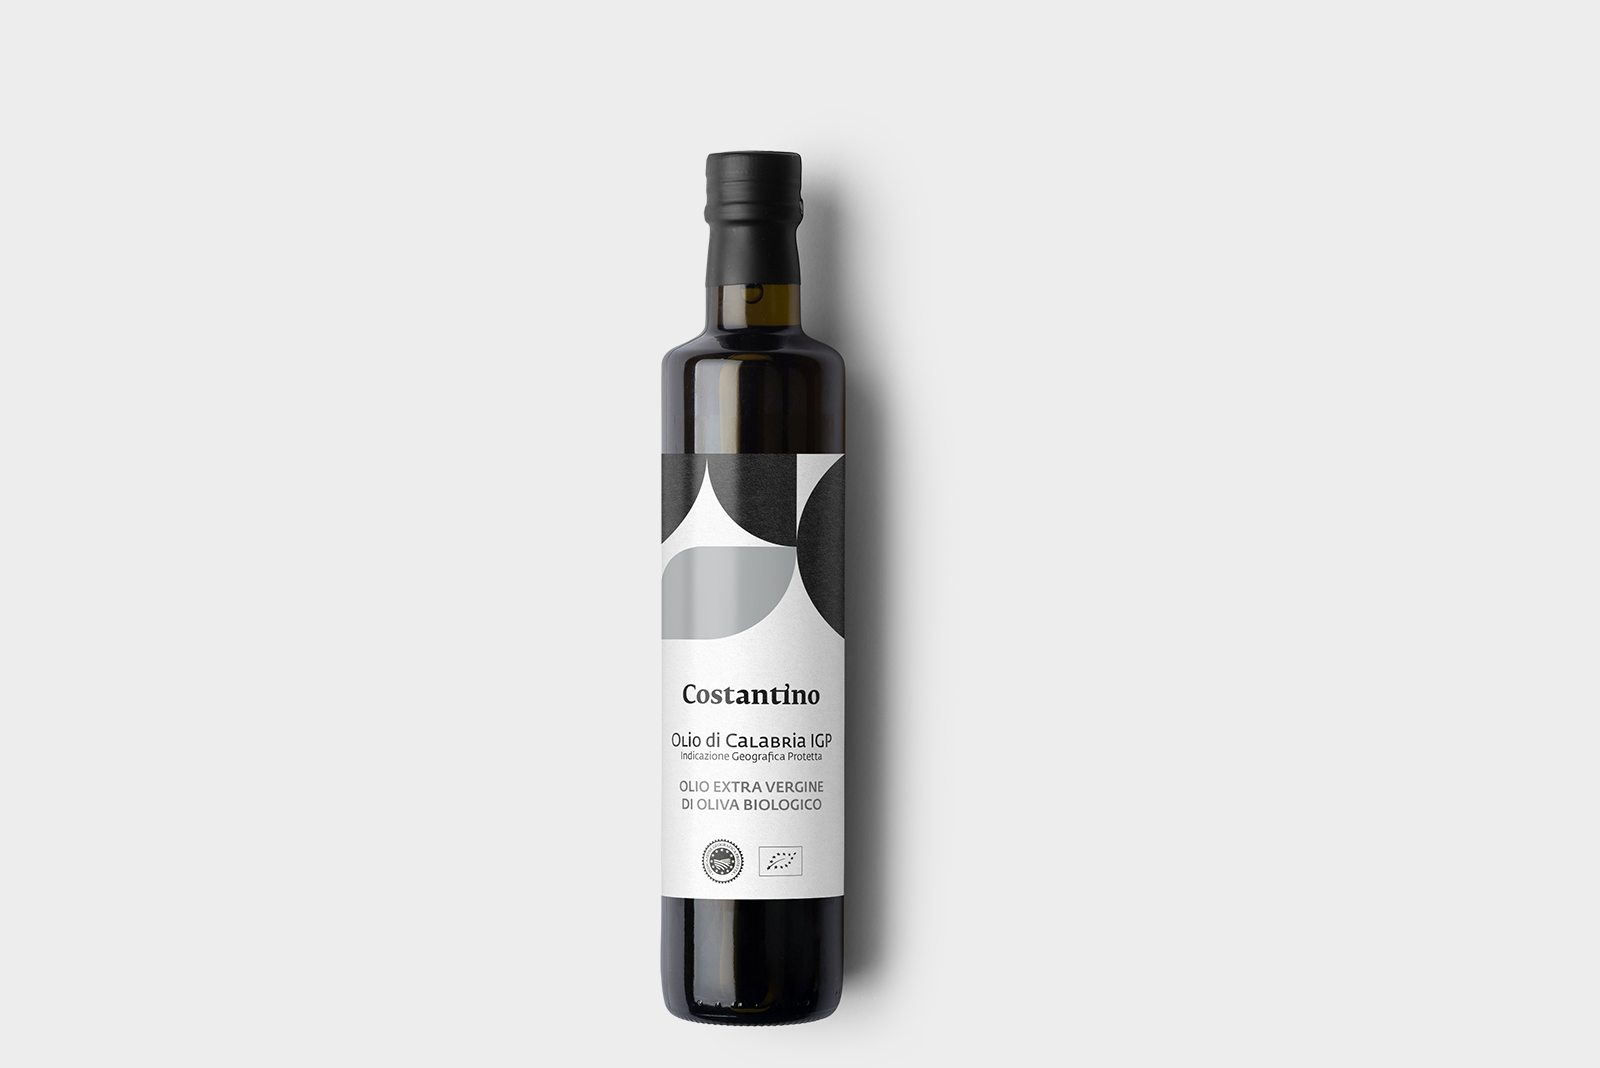 Costantino - Olio Extra Vergine d’Oliva Biologico IGP Calabria - bottiglia 75cl